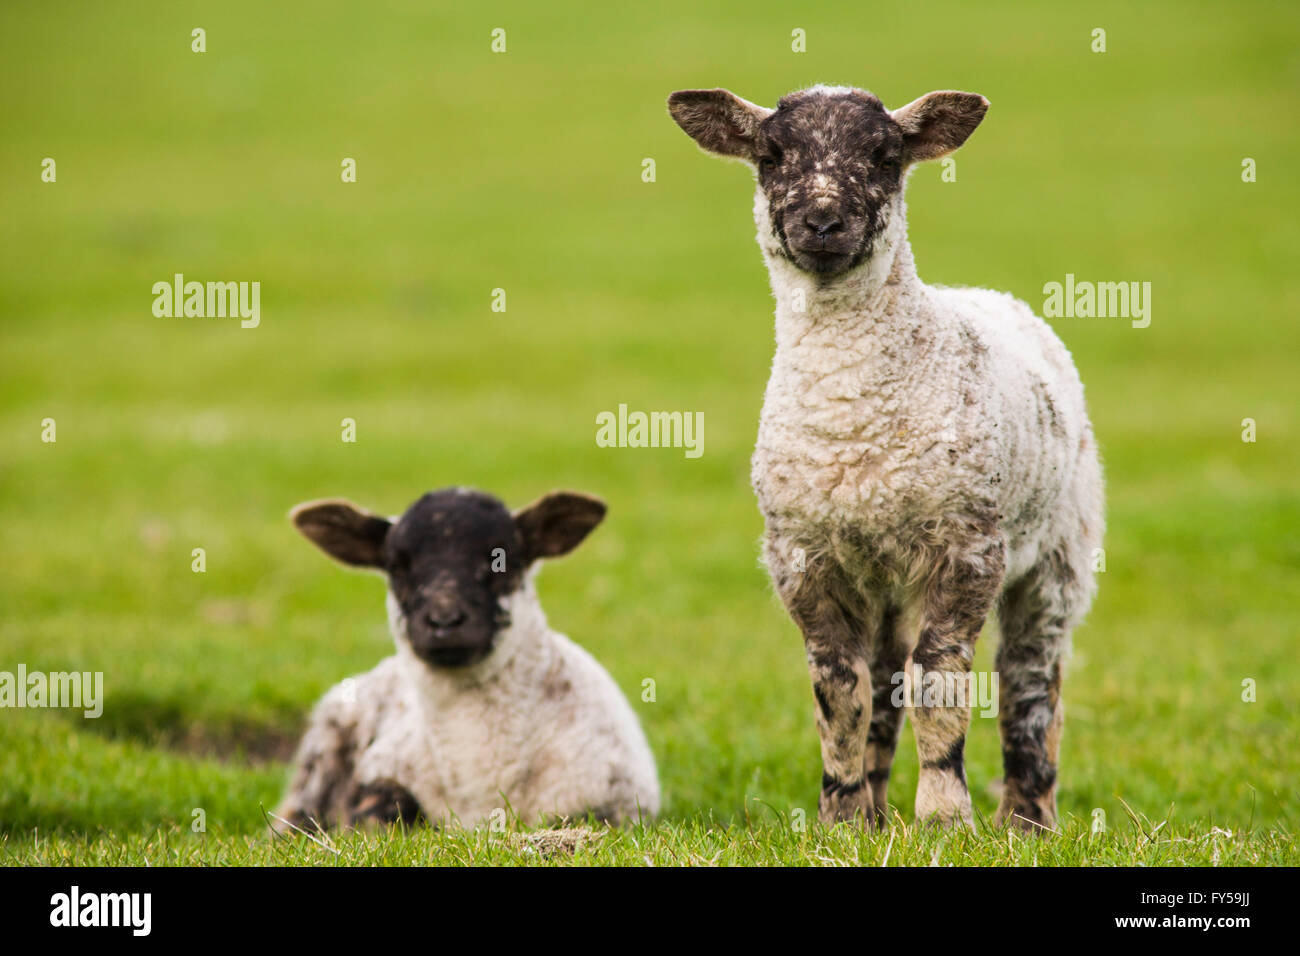 Lambs on grass, Fair Isle, Shetland Islands, Scotland, Great Britain Stock Photo